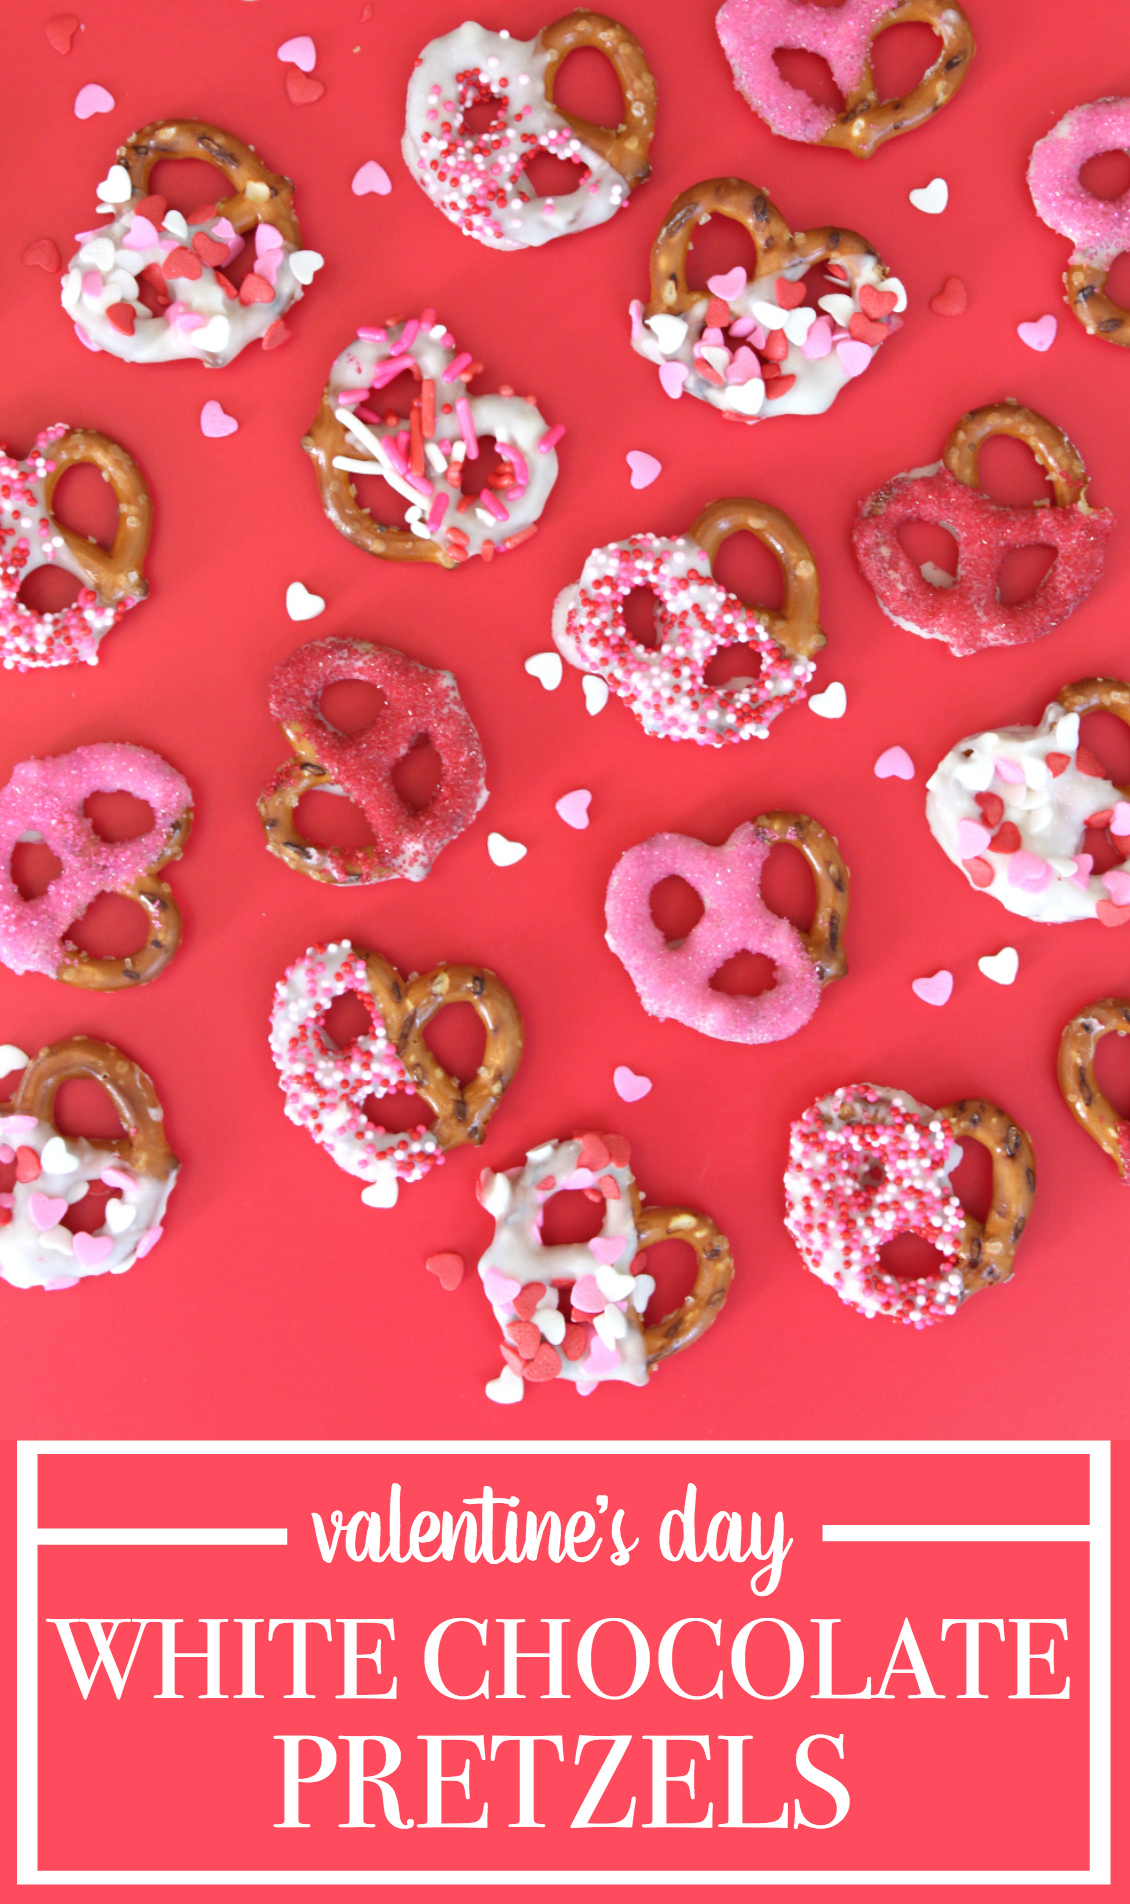 Valentine's white chocolate covered pretzels recipe by blogger Stephanie Ziajka on Diary of a Debutante